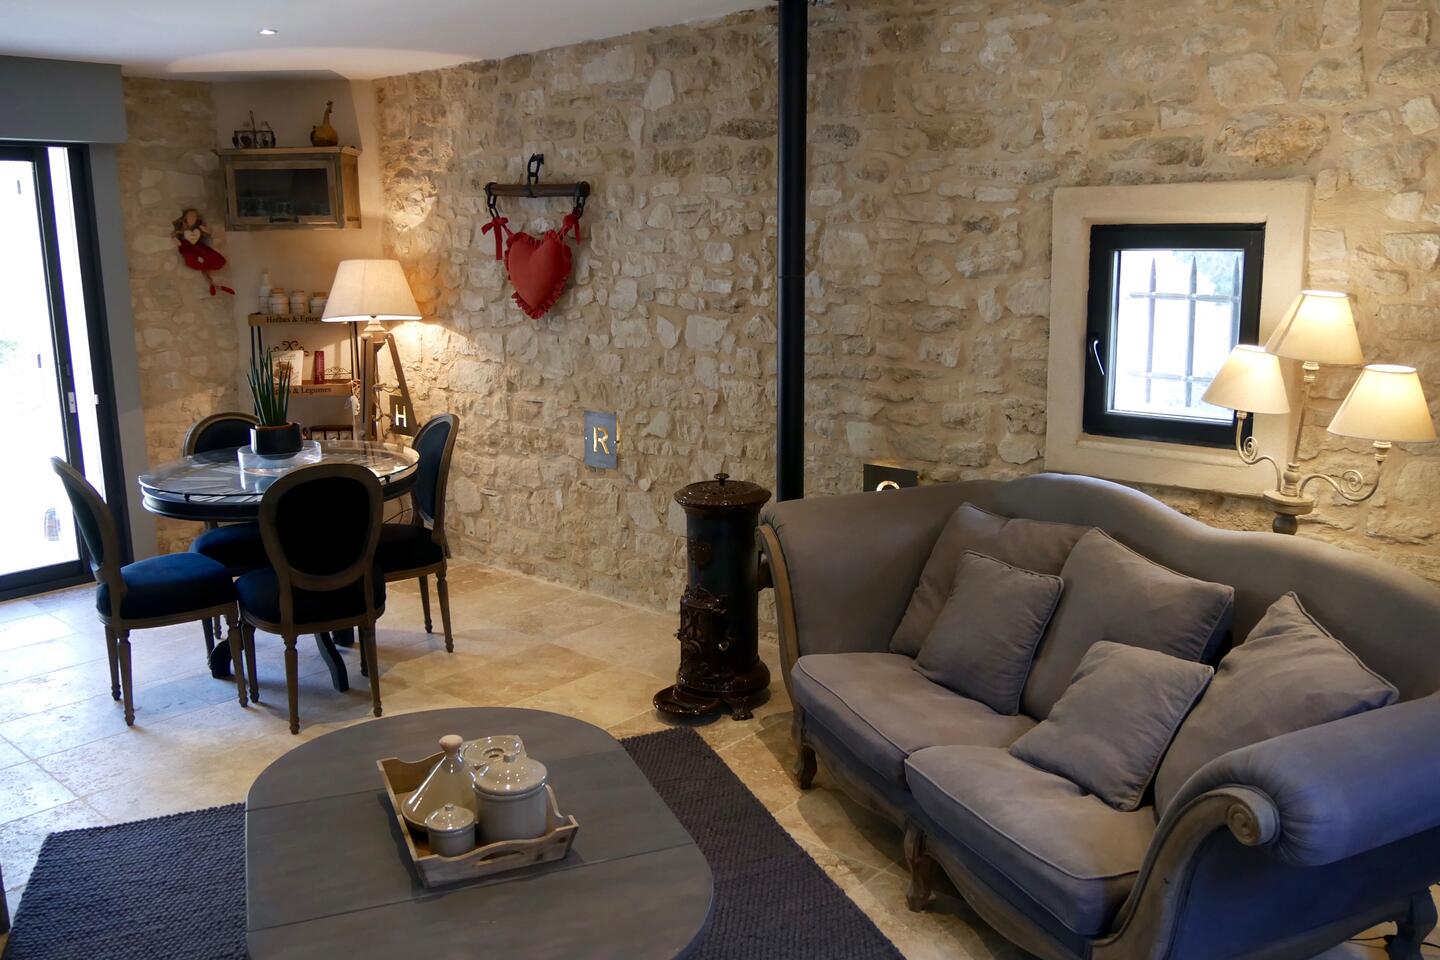 24 - La Roque sur Pernes: Villa: Interior - Living room - Annex